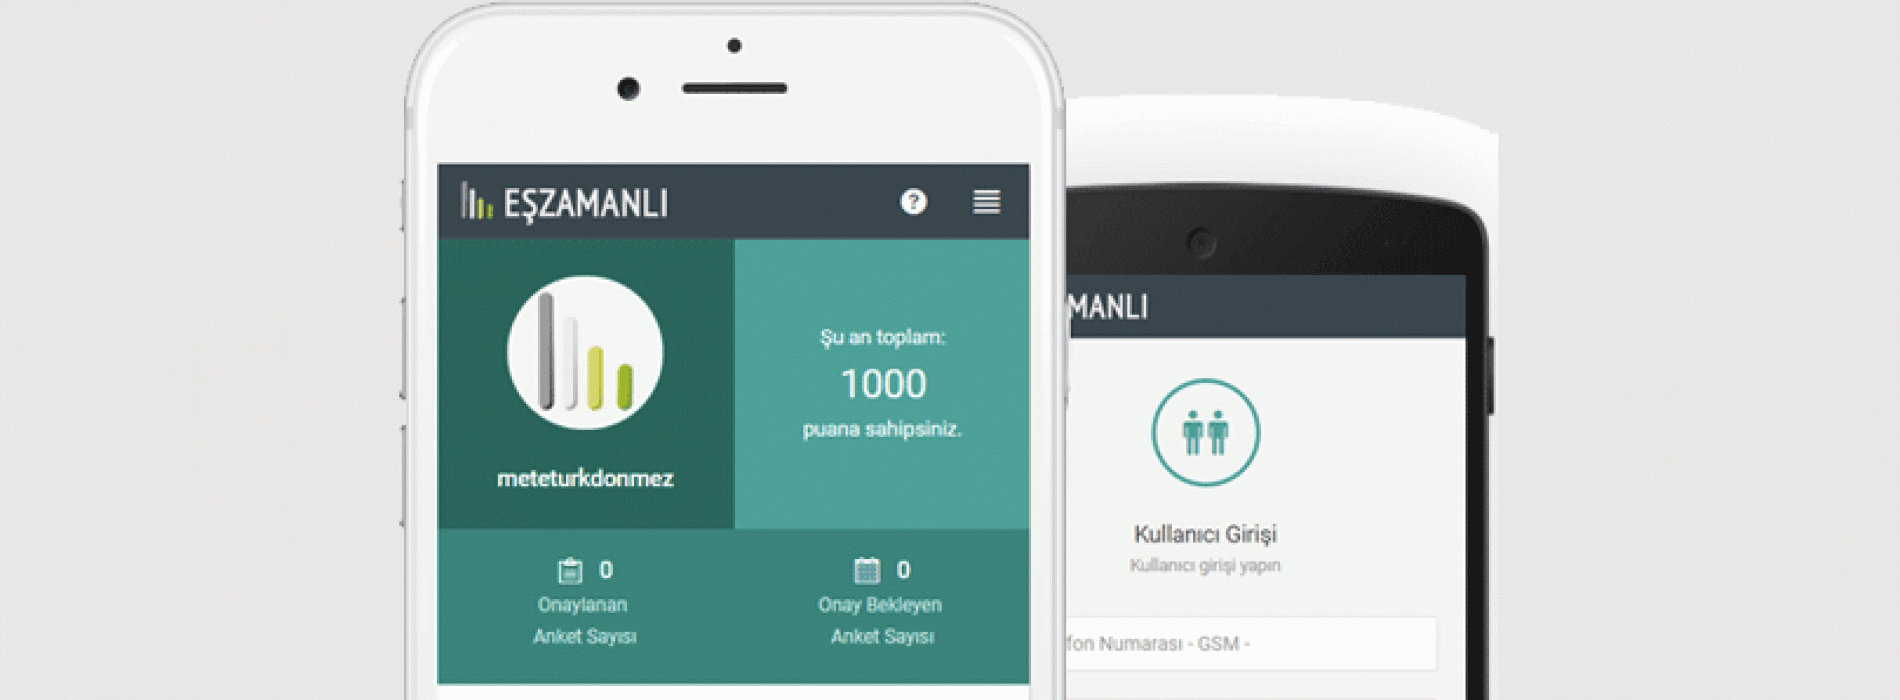 Eşzamanlı-Umfrage Applikation ist herausgegeben